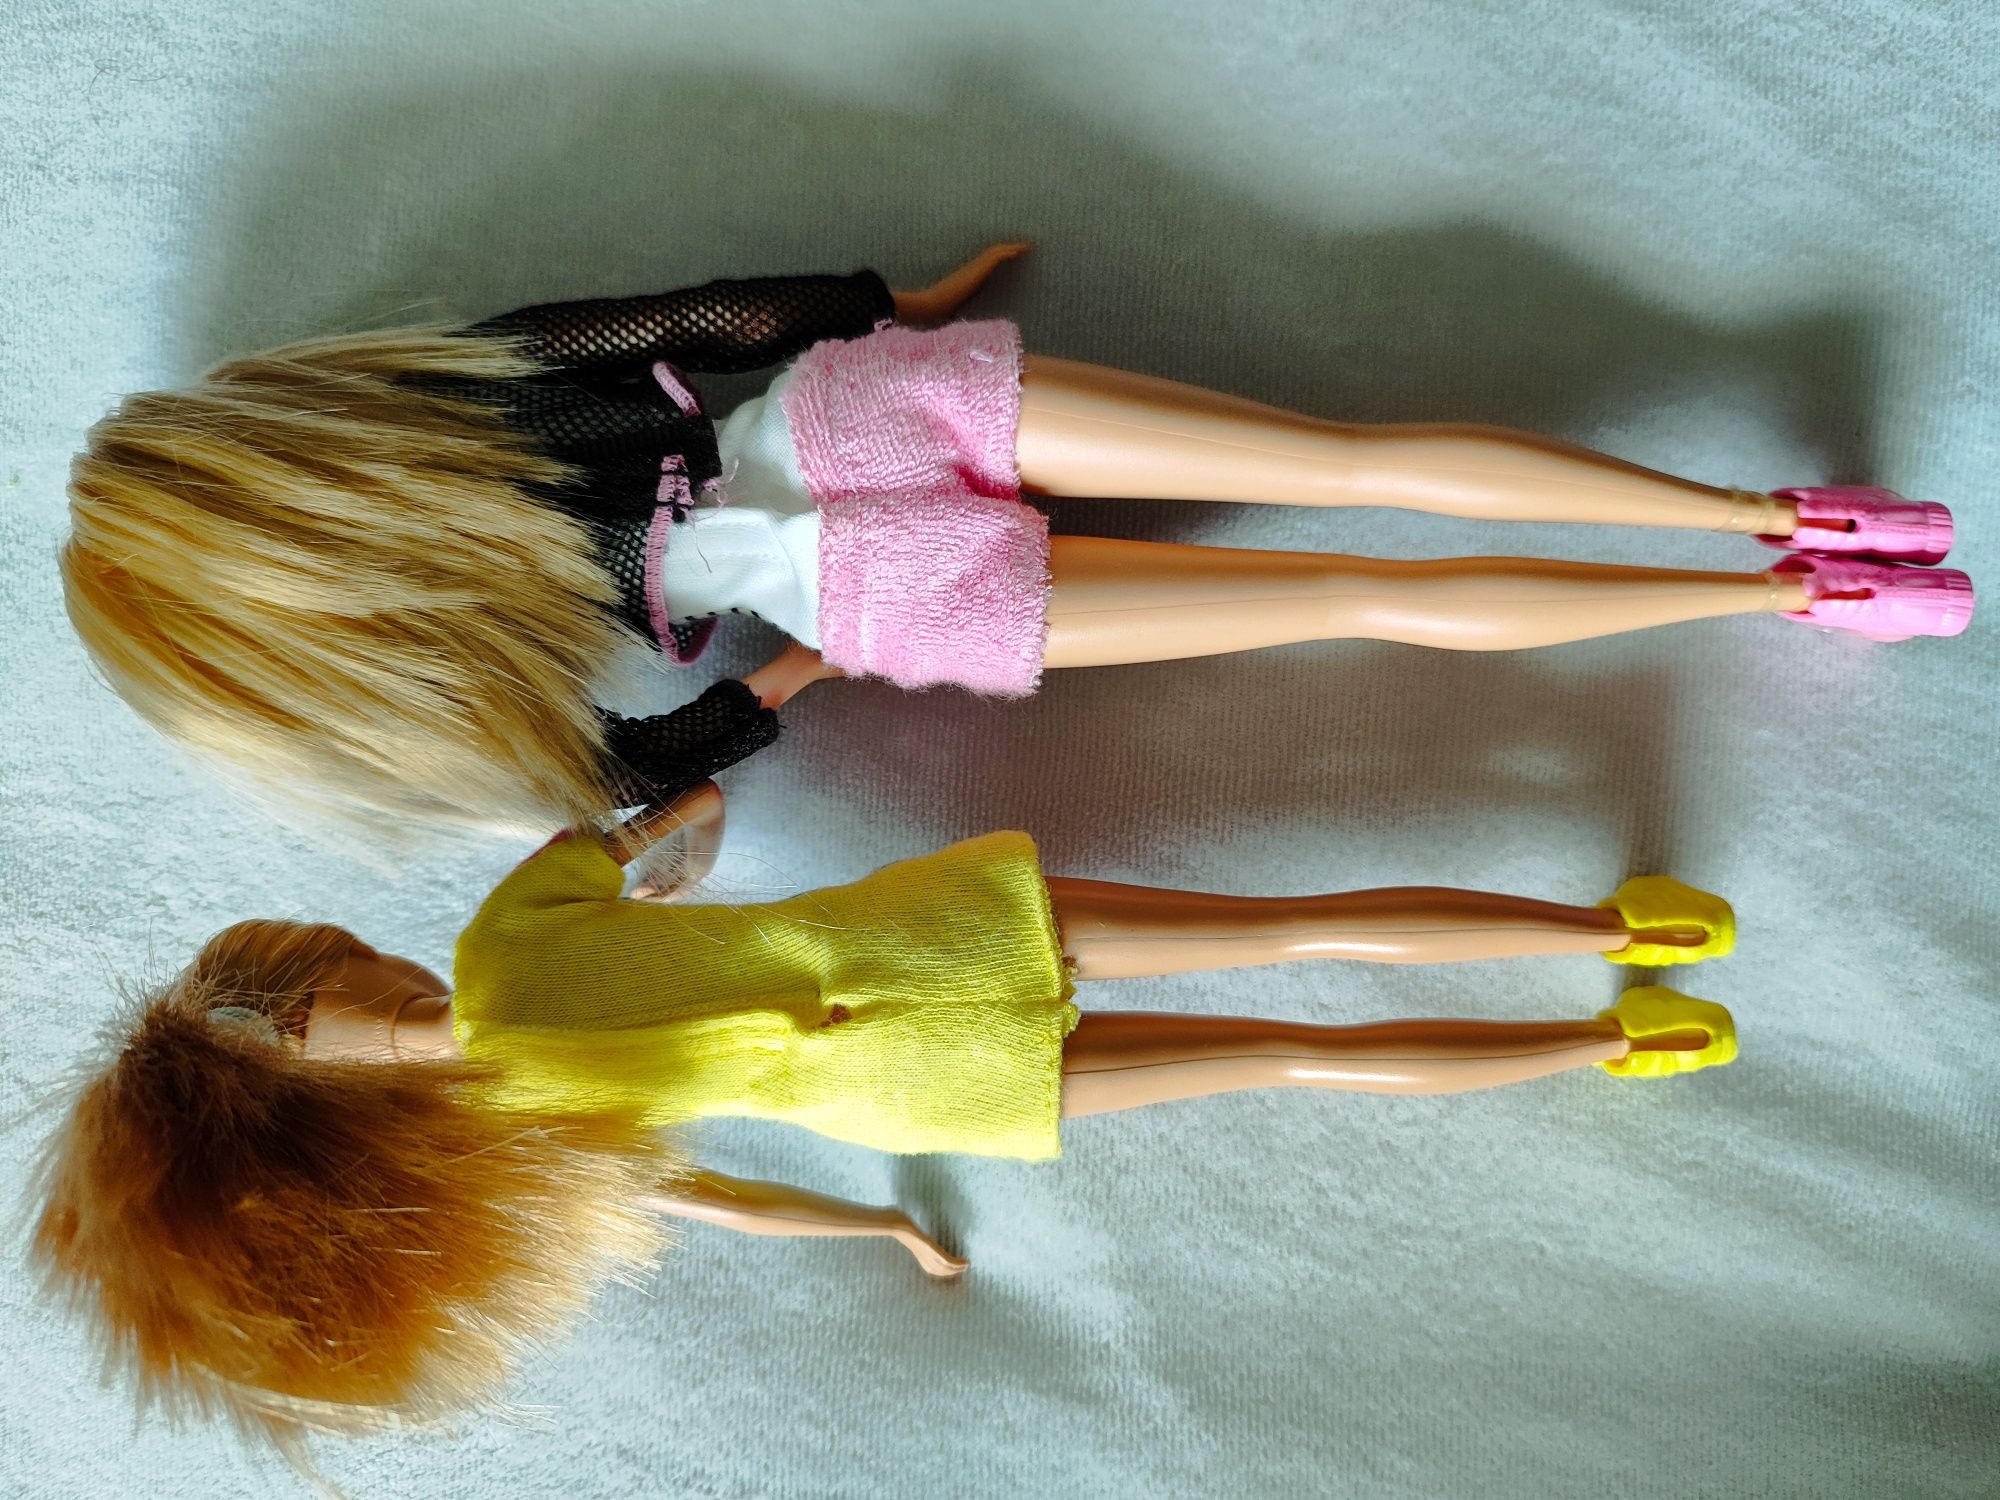 Lalka Barbie i młodsza siostra oryginalne